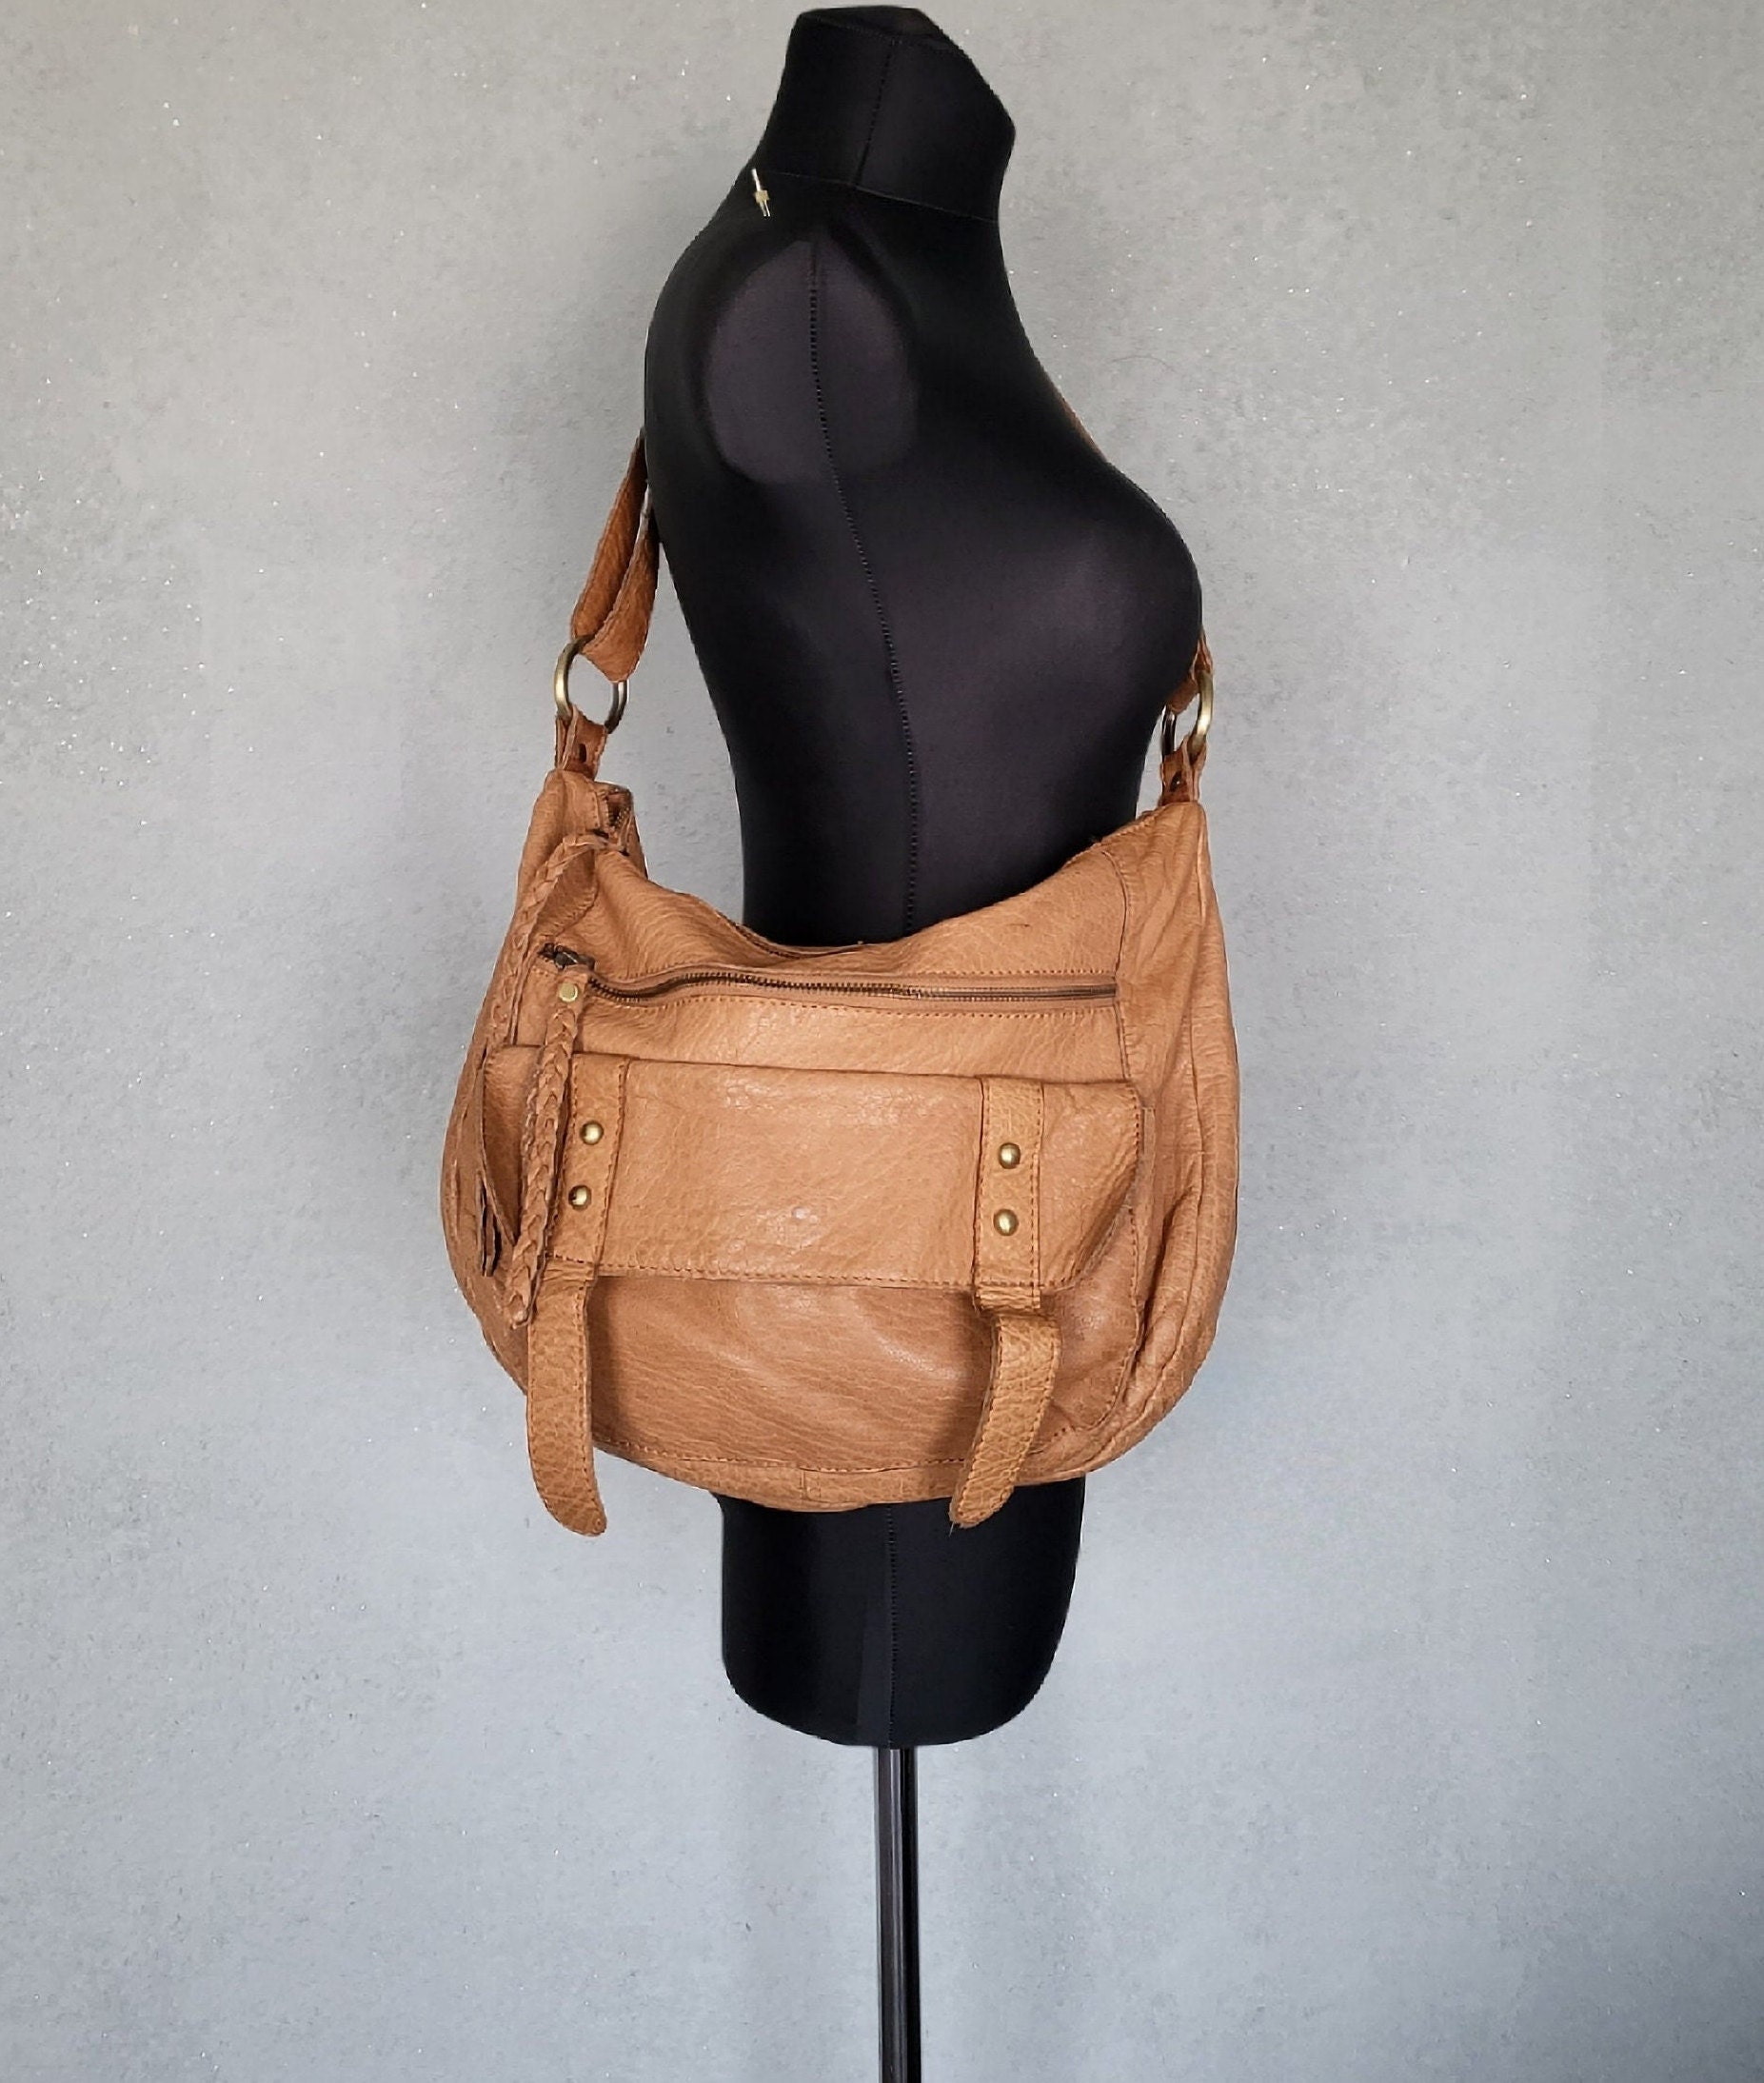 Amazon's Aldo Greenwald Crossbody Bag Looks Like a Designer Purse